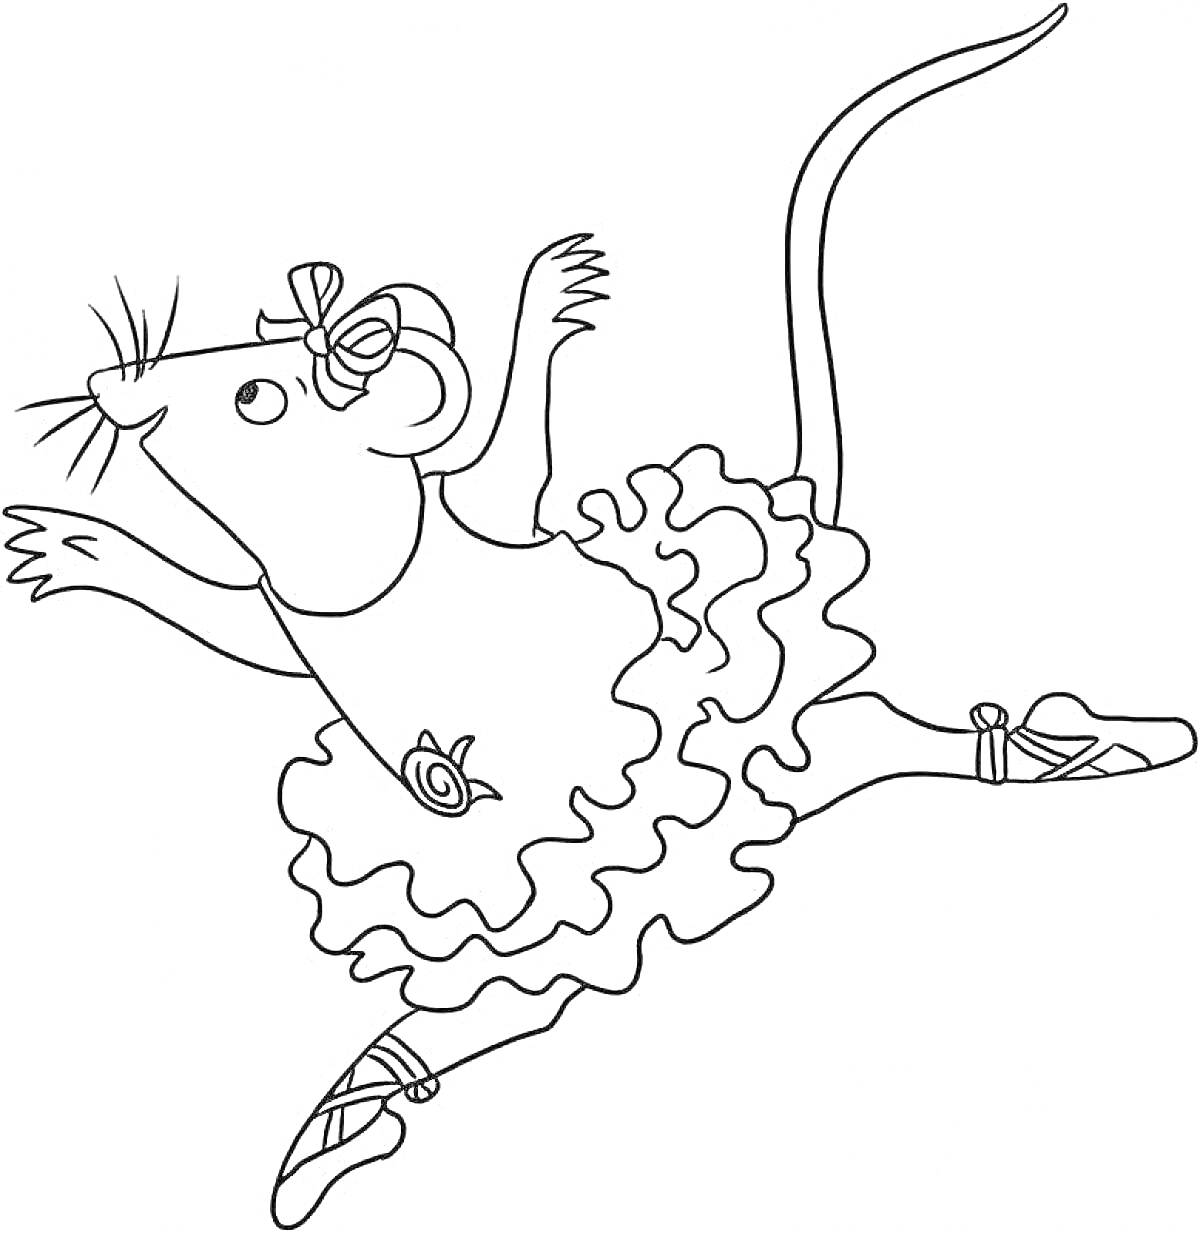 Мышка-балерина в пачке и пуантах